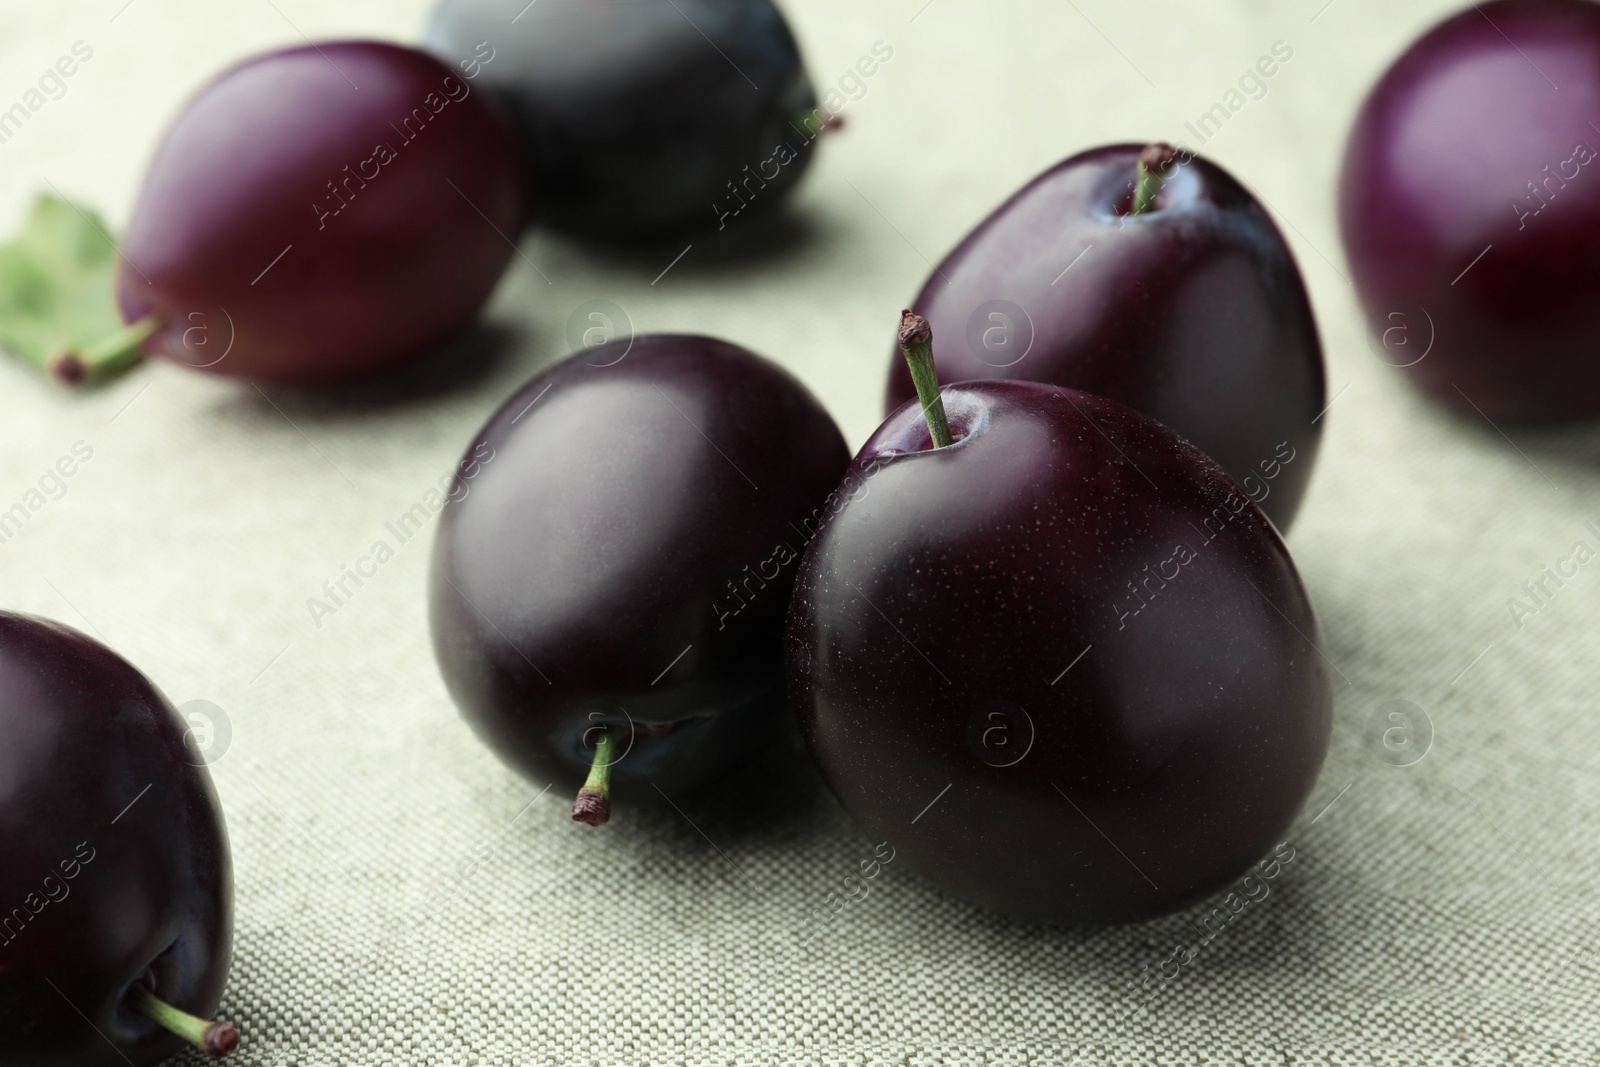 Photo of Many tasty ripe plums on light fabric, closeup